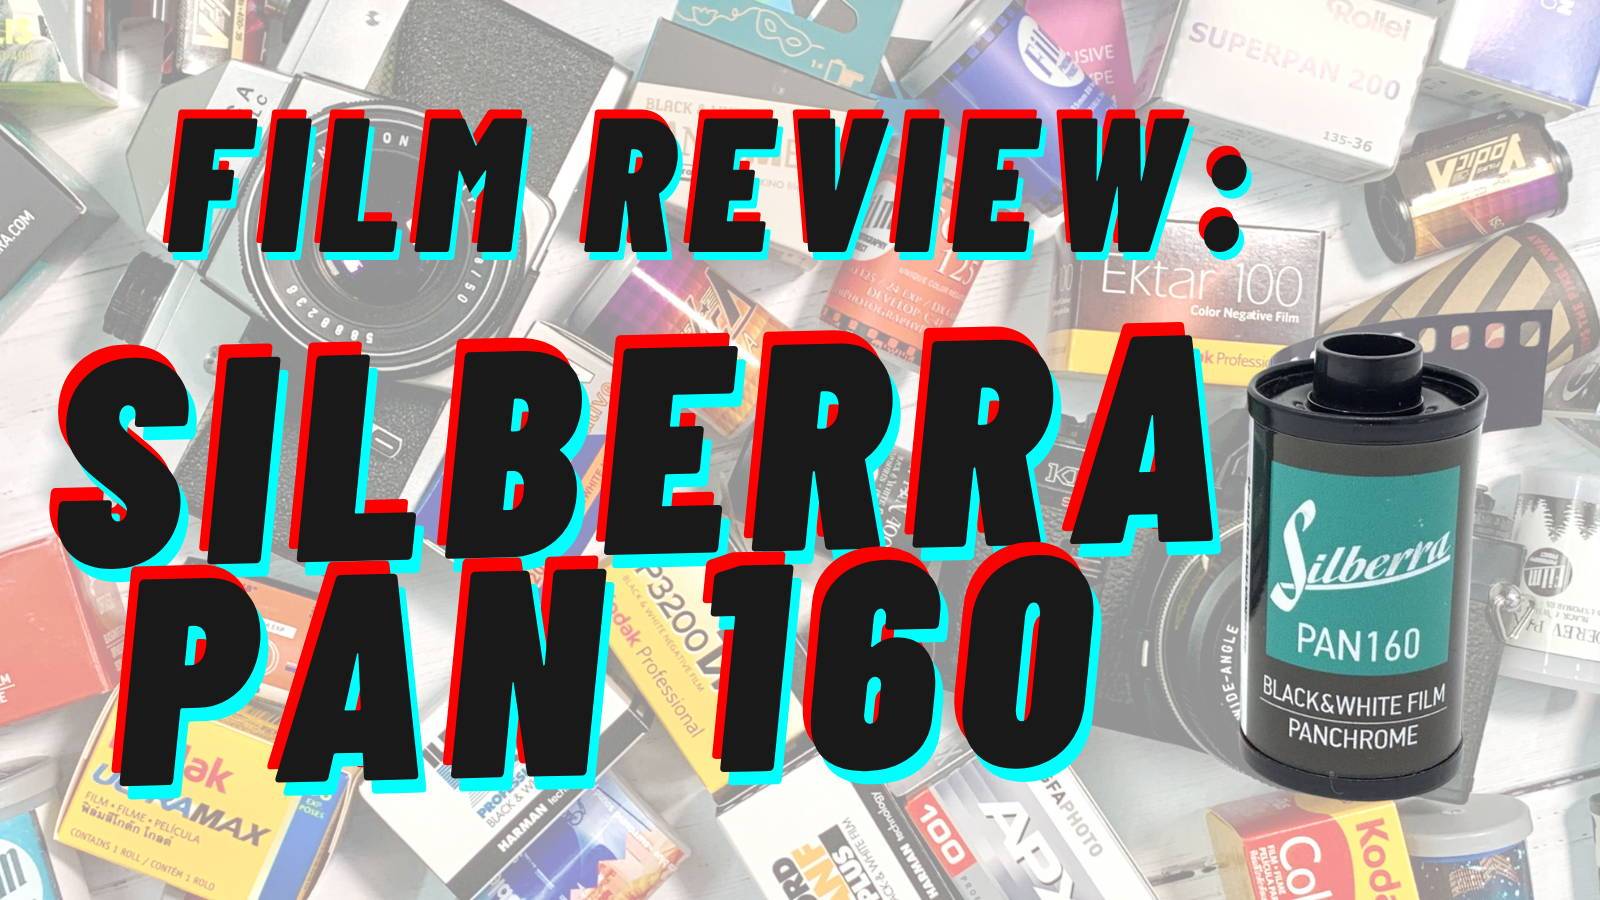 Silberra Pan 160 Film Review - Analogue Wonderland